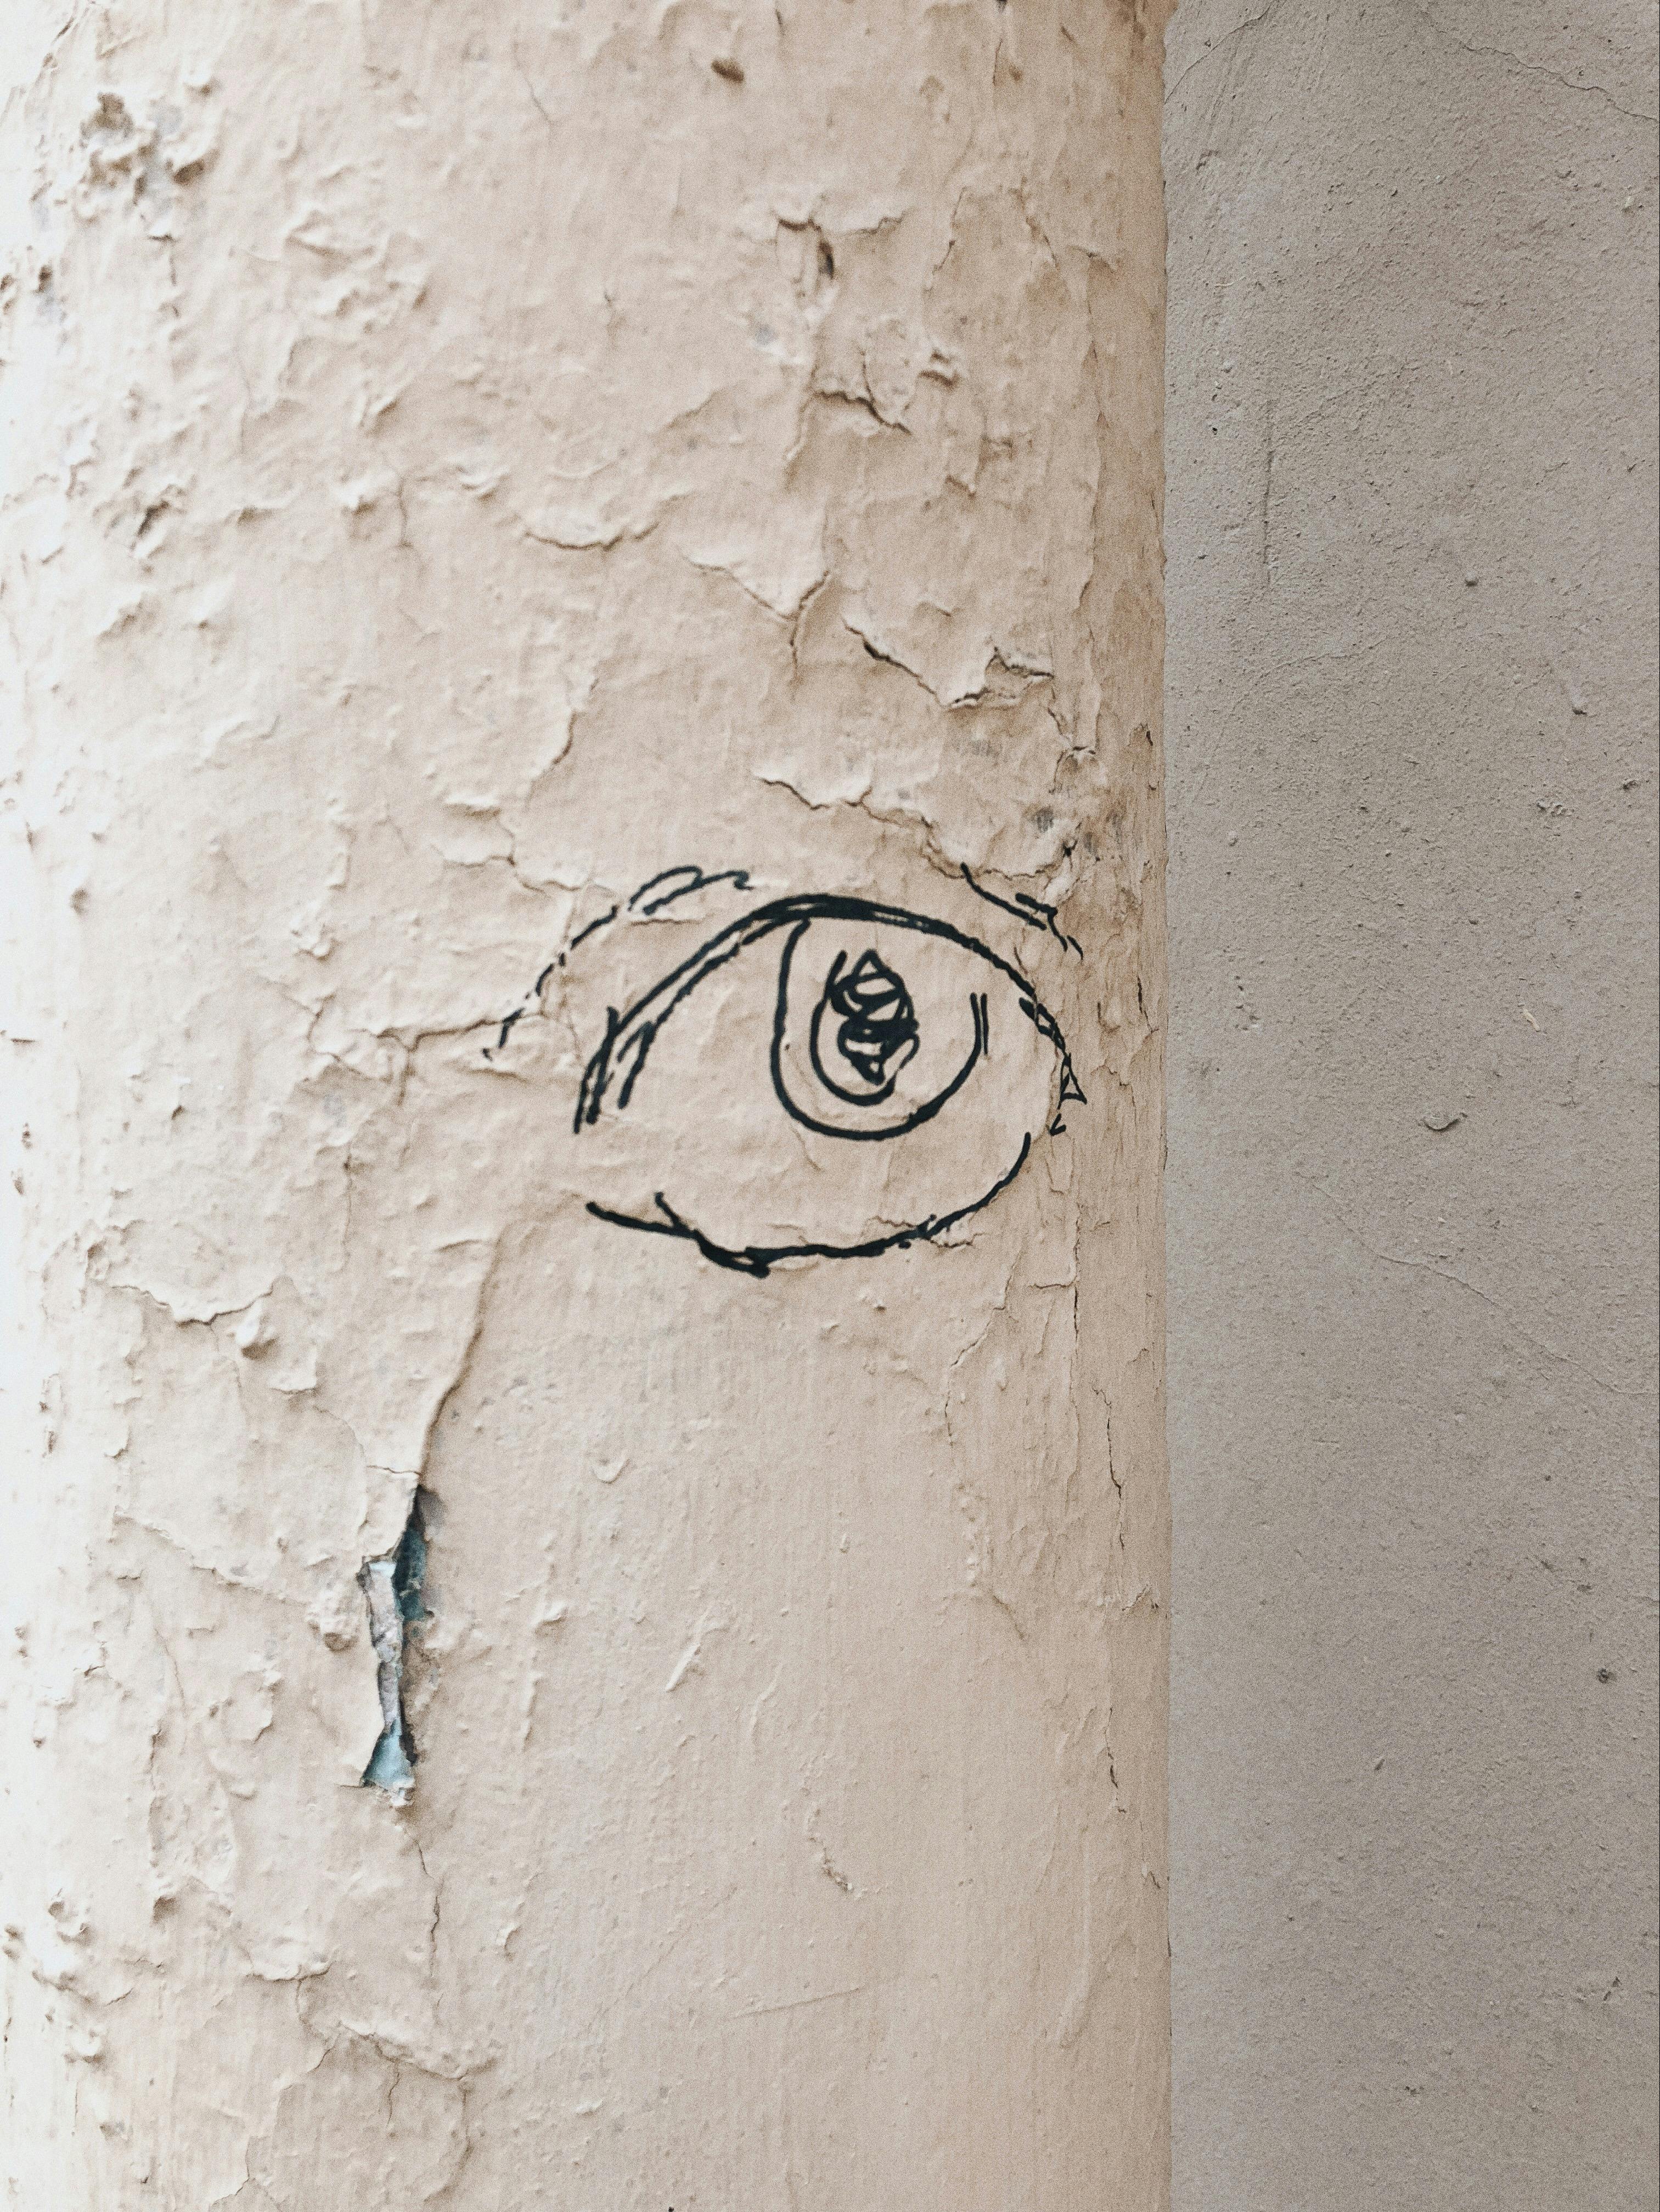 eye illustration on pilkar